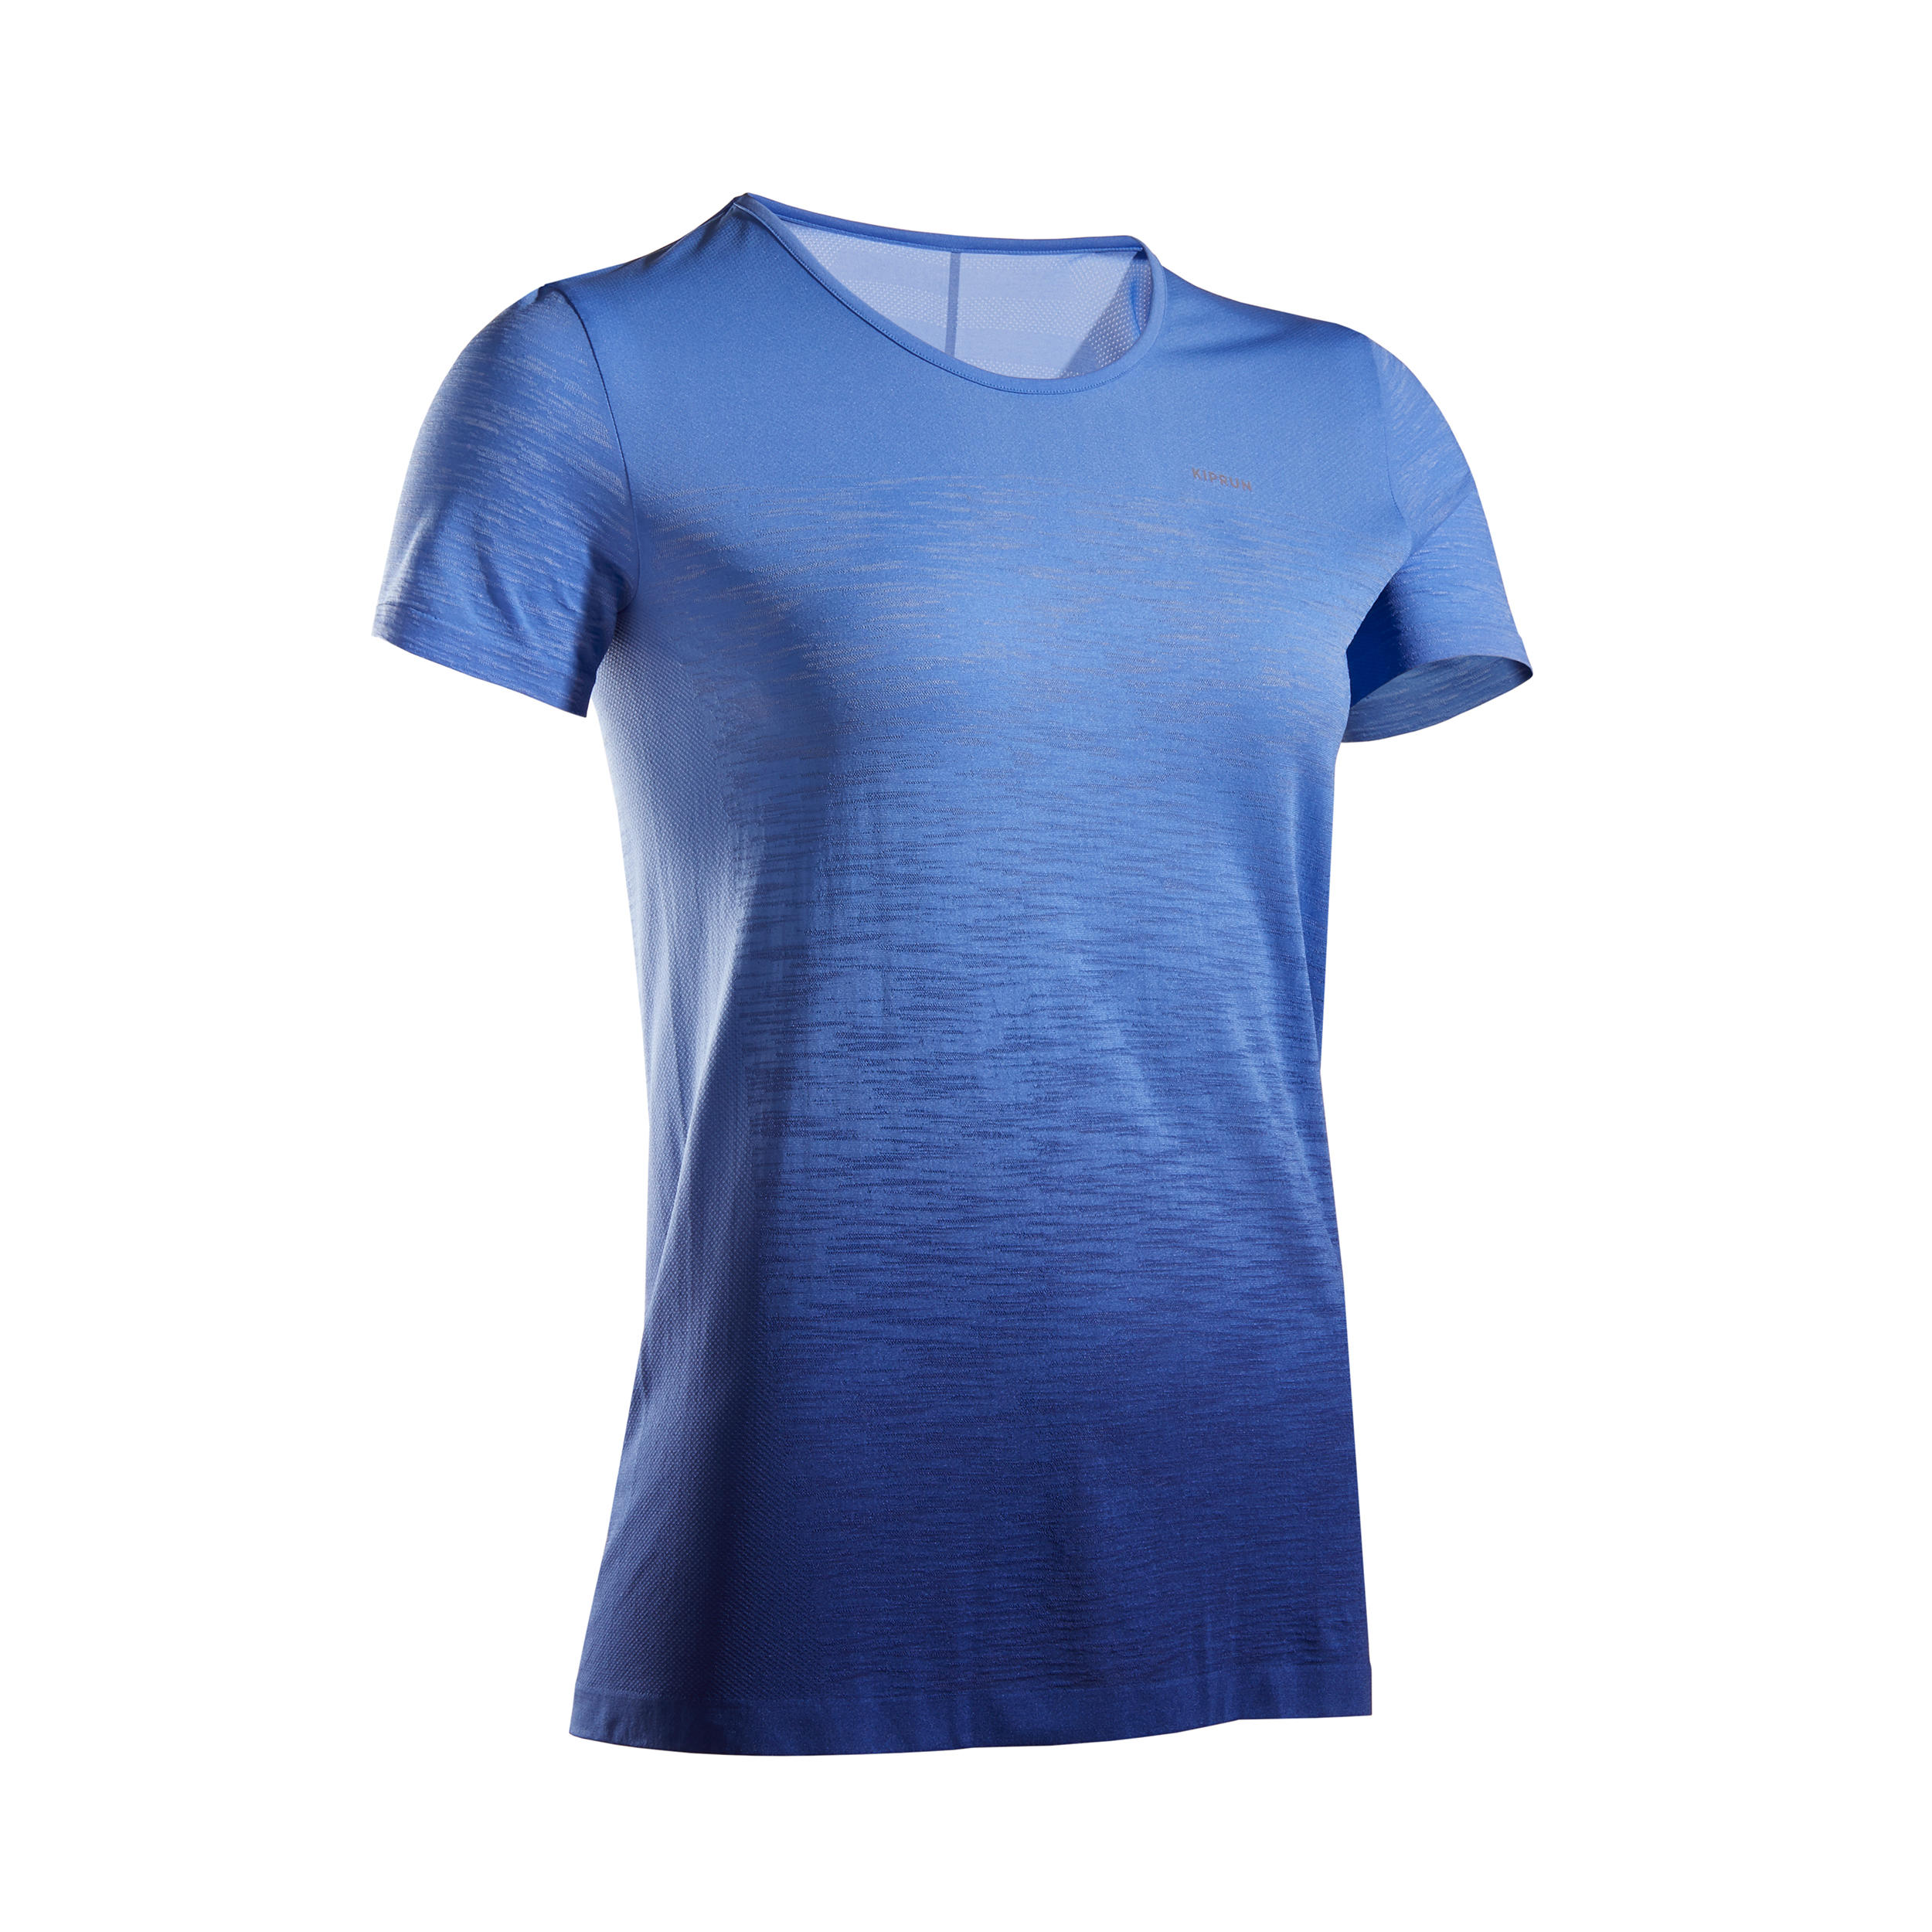 KIPRUN CARE WOMEN'S BREATHABLE RUNNING T-SHIRT - BLUE 1/2